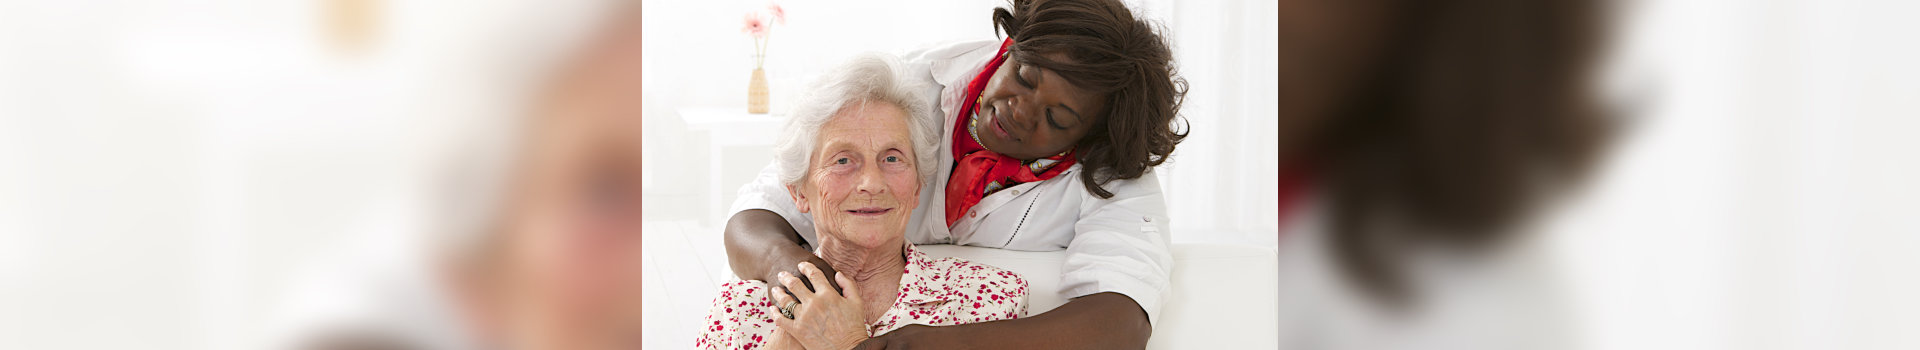 caregiver hugging her patient